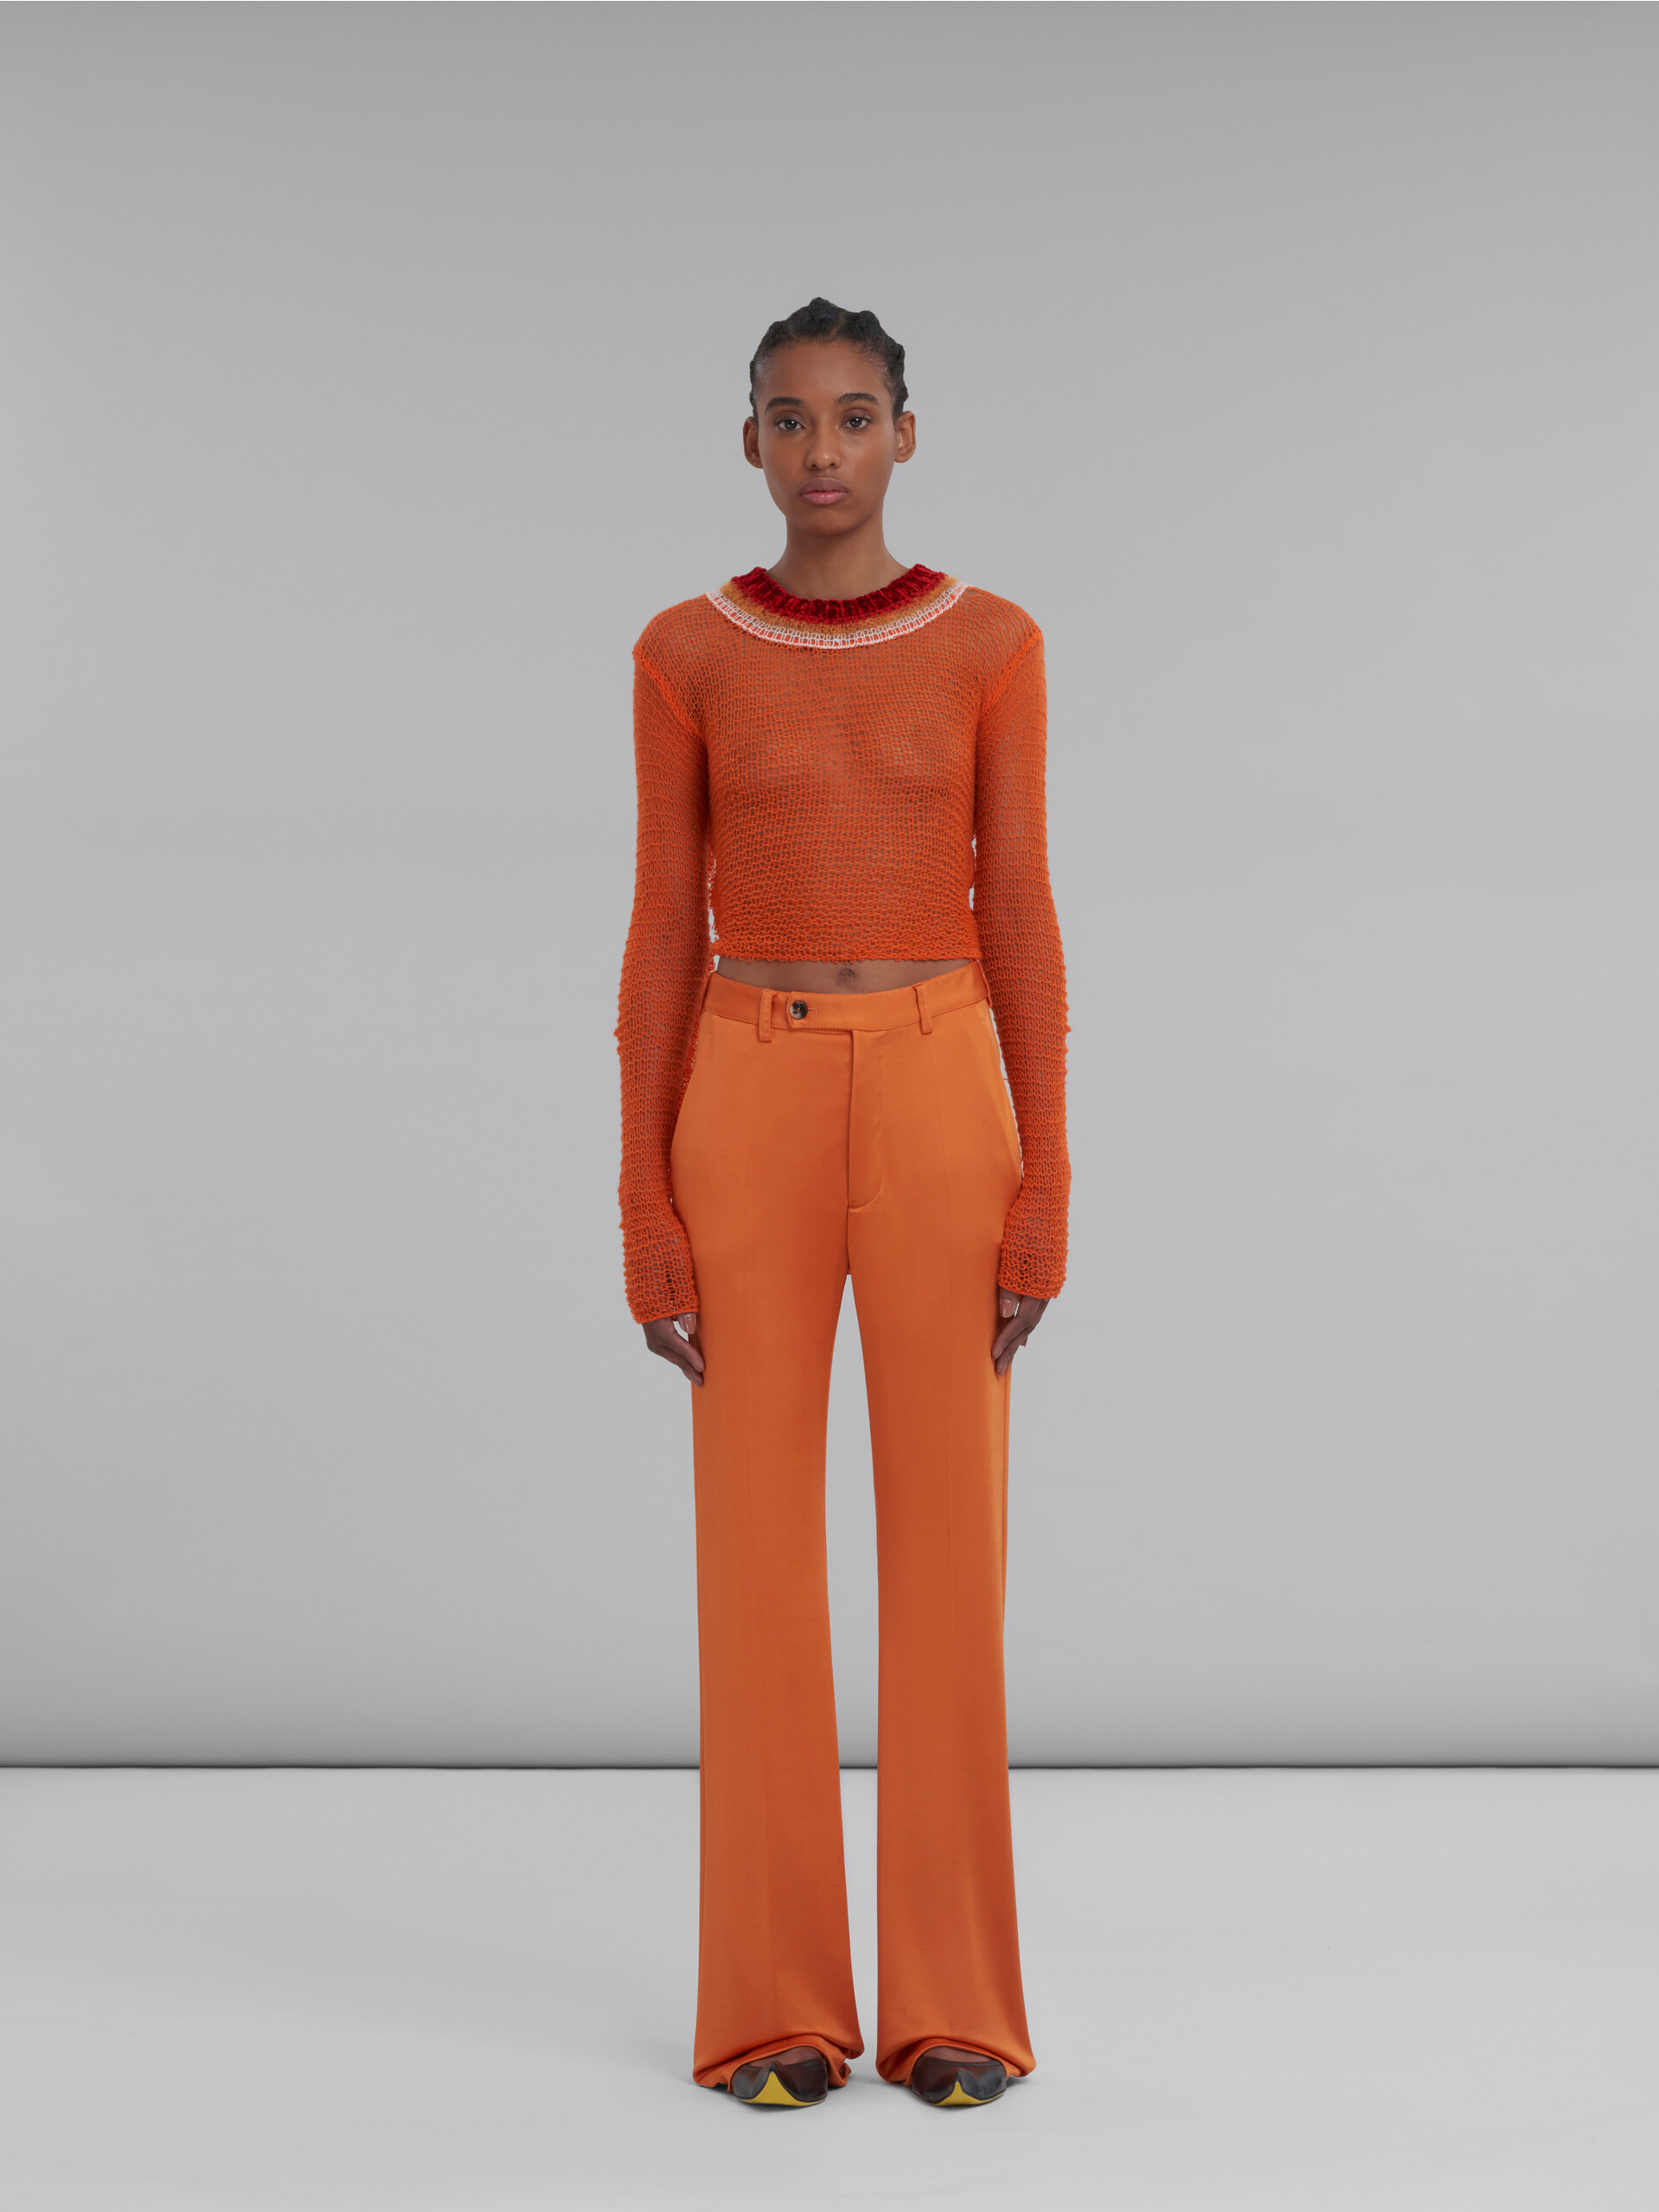 Orange stretch jersey trousers - Pants - Image 2